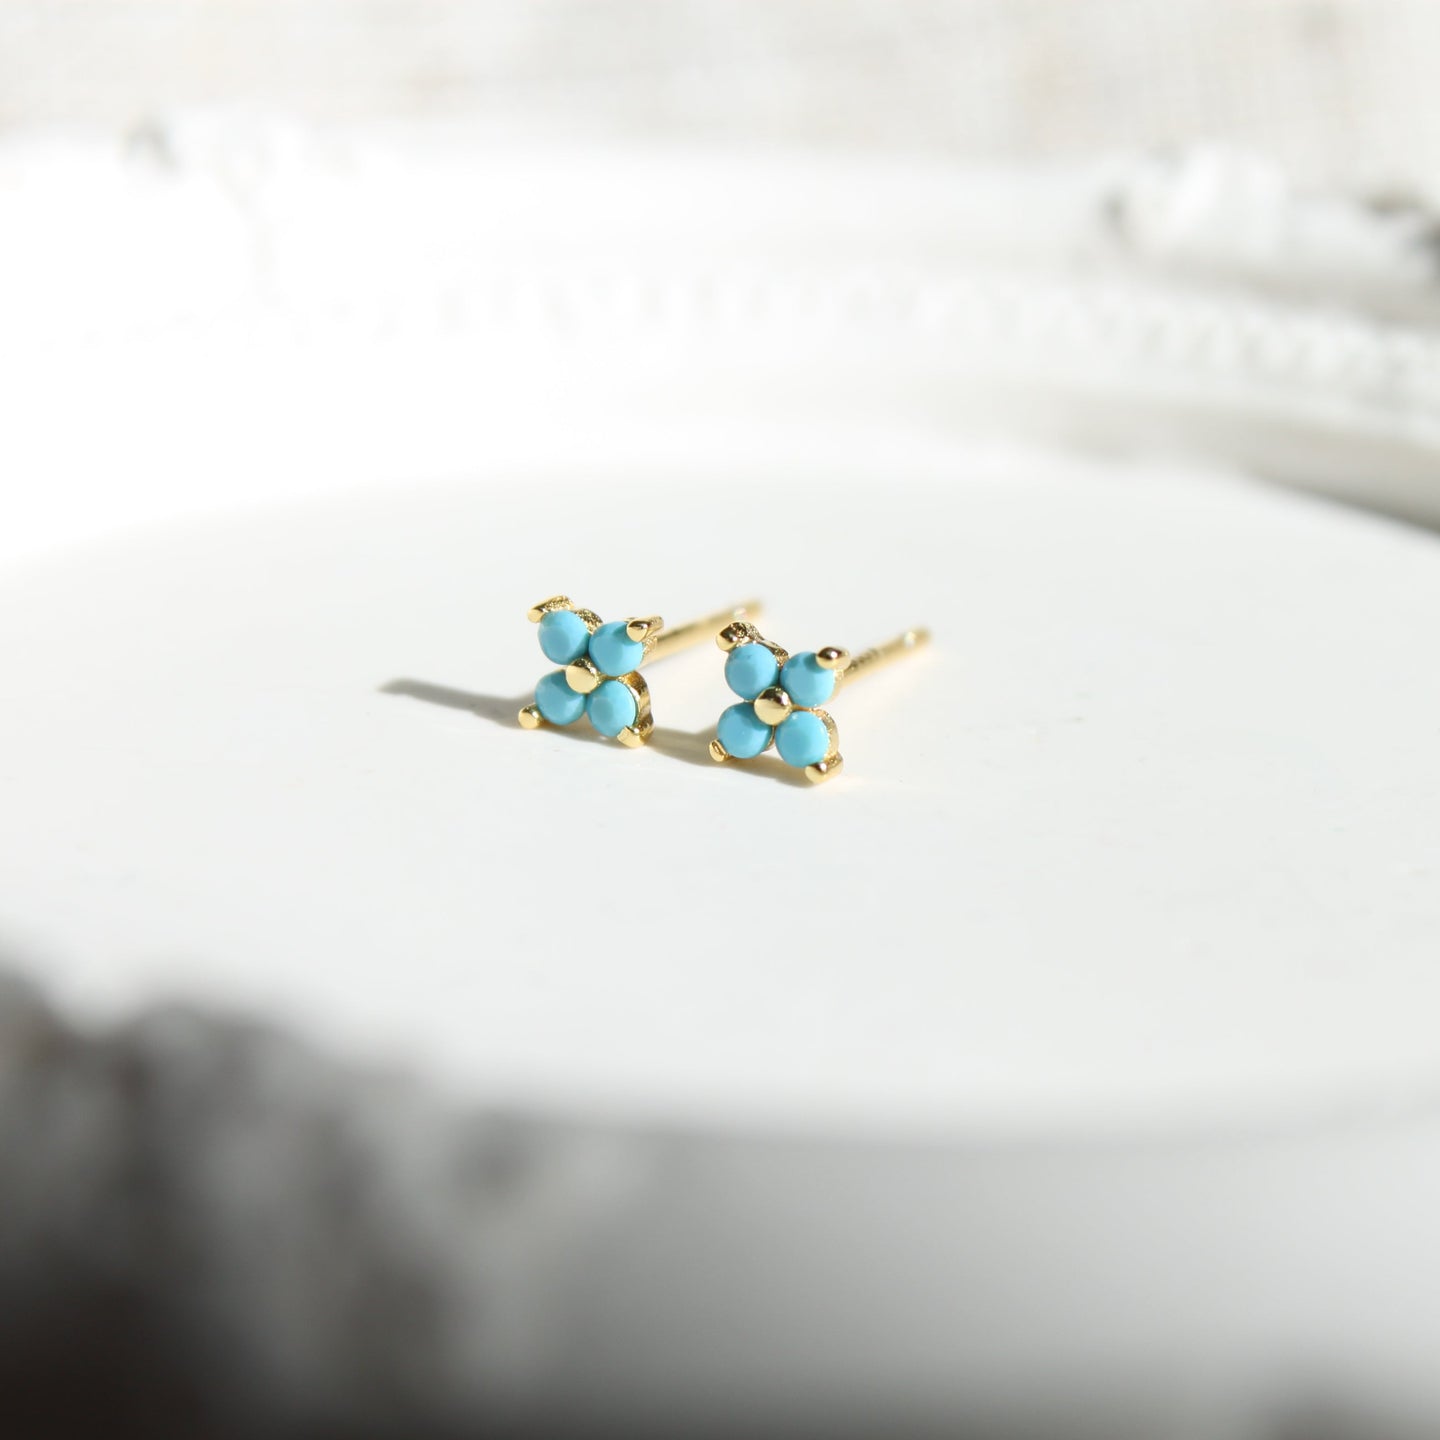 The Turquoise Clover Stud - Elisa Maree Jewelry